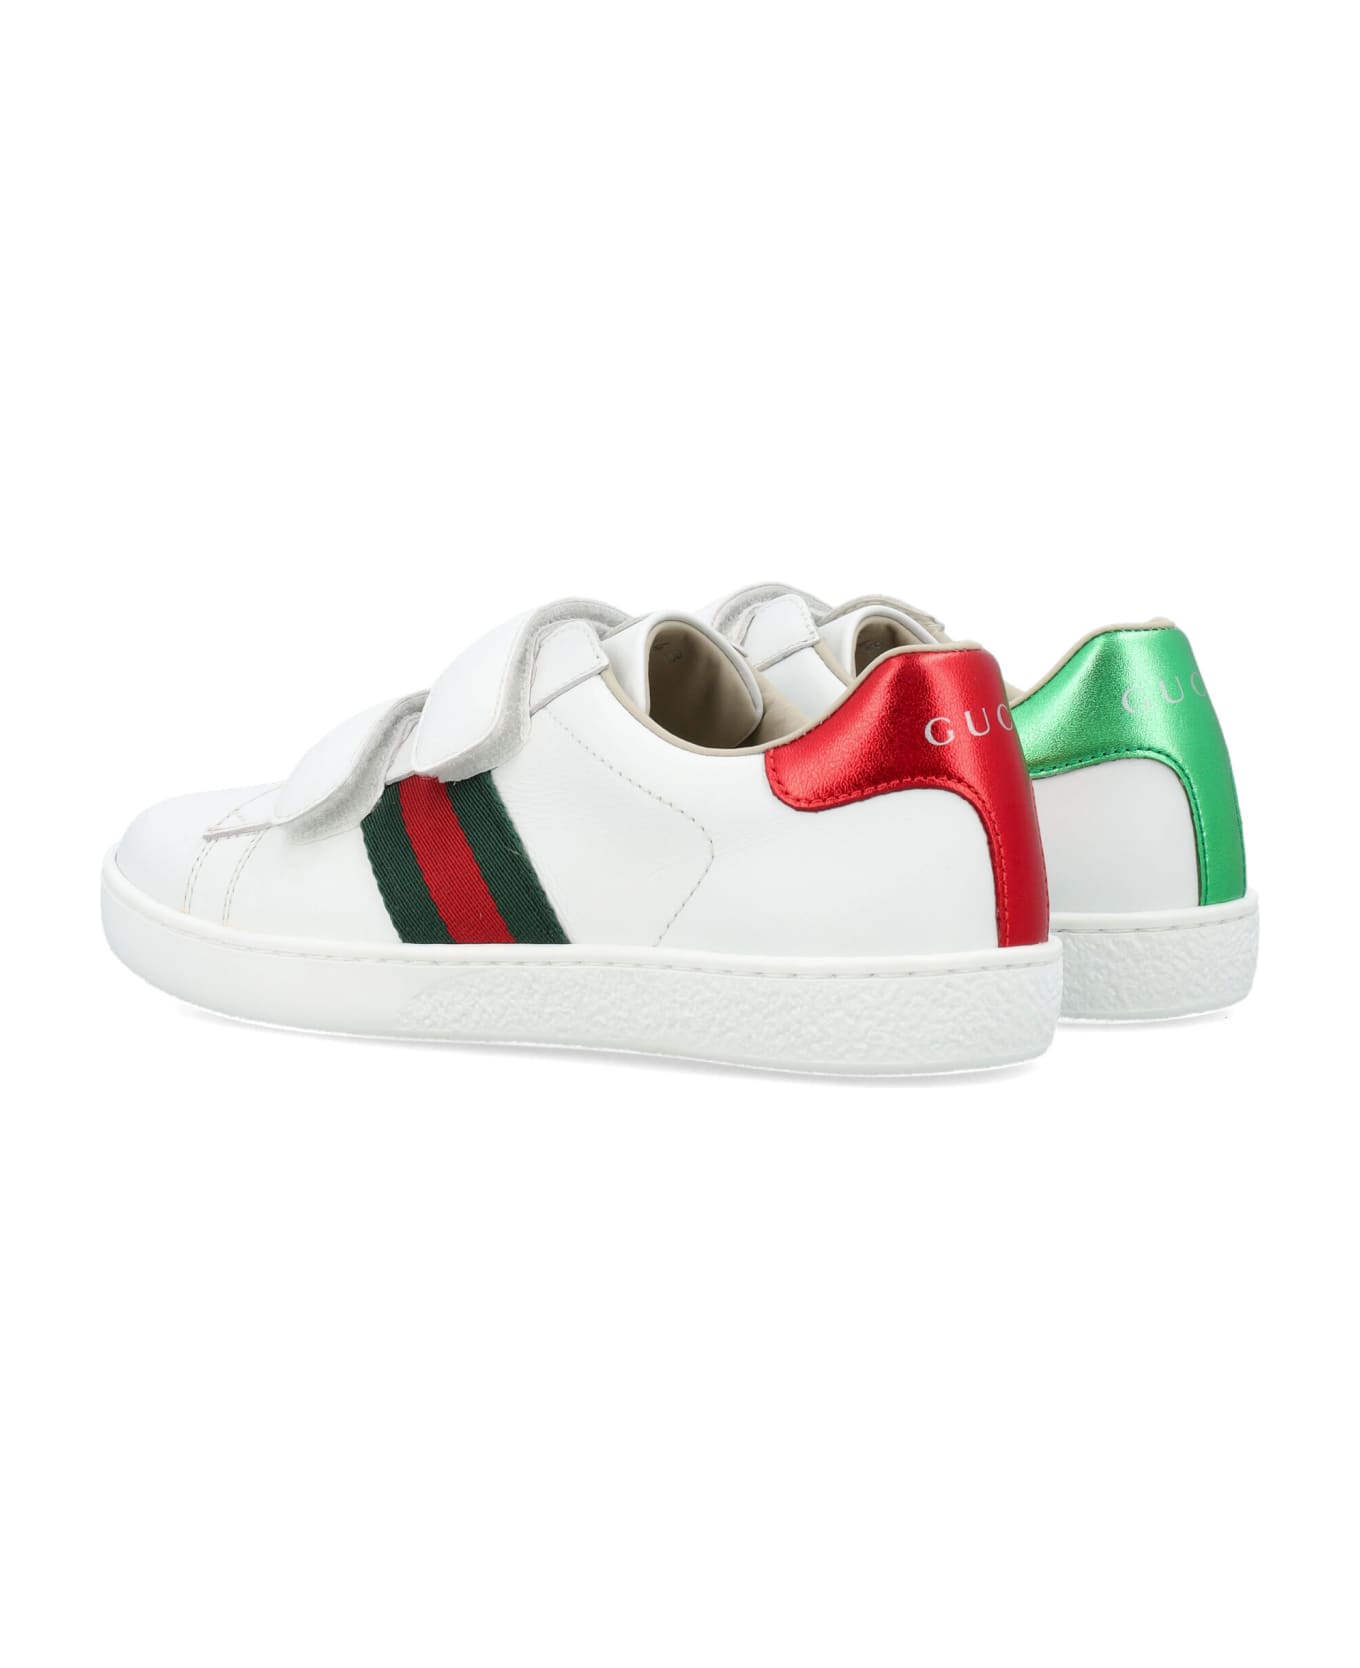 Gucci Ace Leather Sneaker - White シューズ